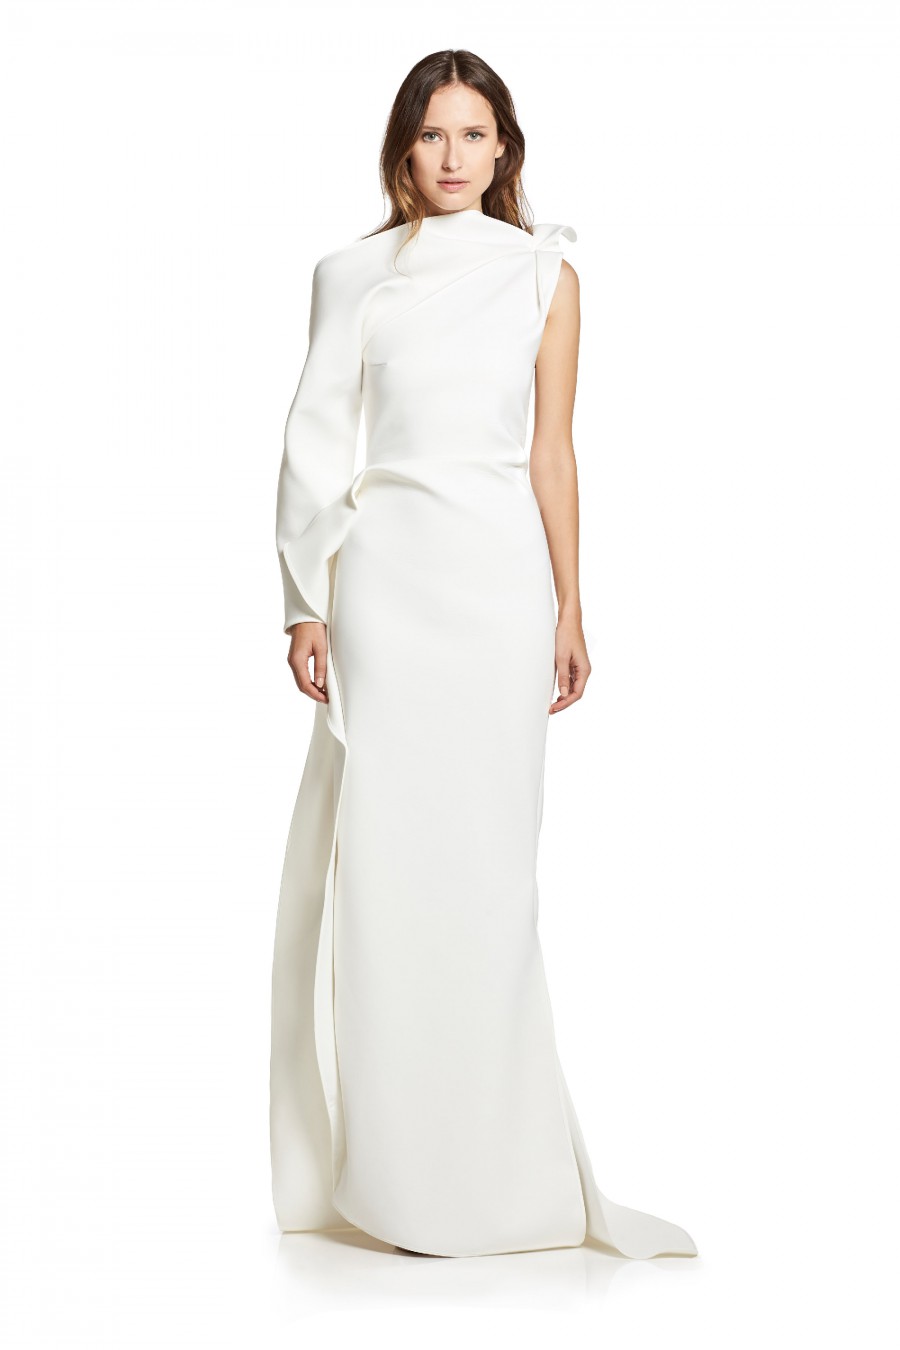 15 Asymmetric Wedding Dress Styles – Stillwhite Blog